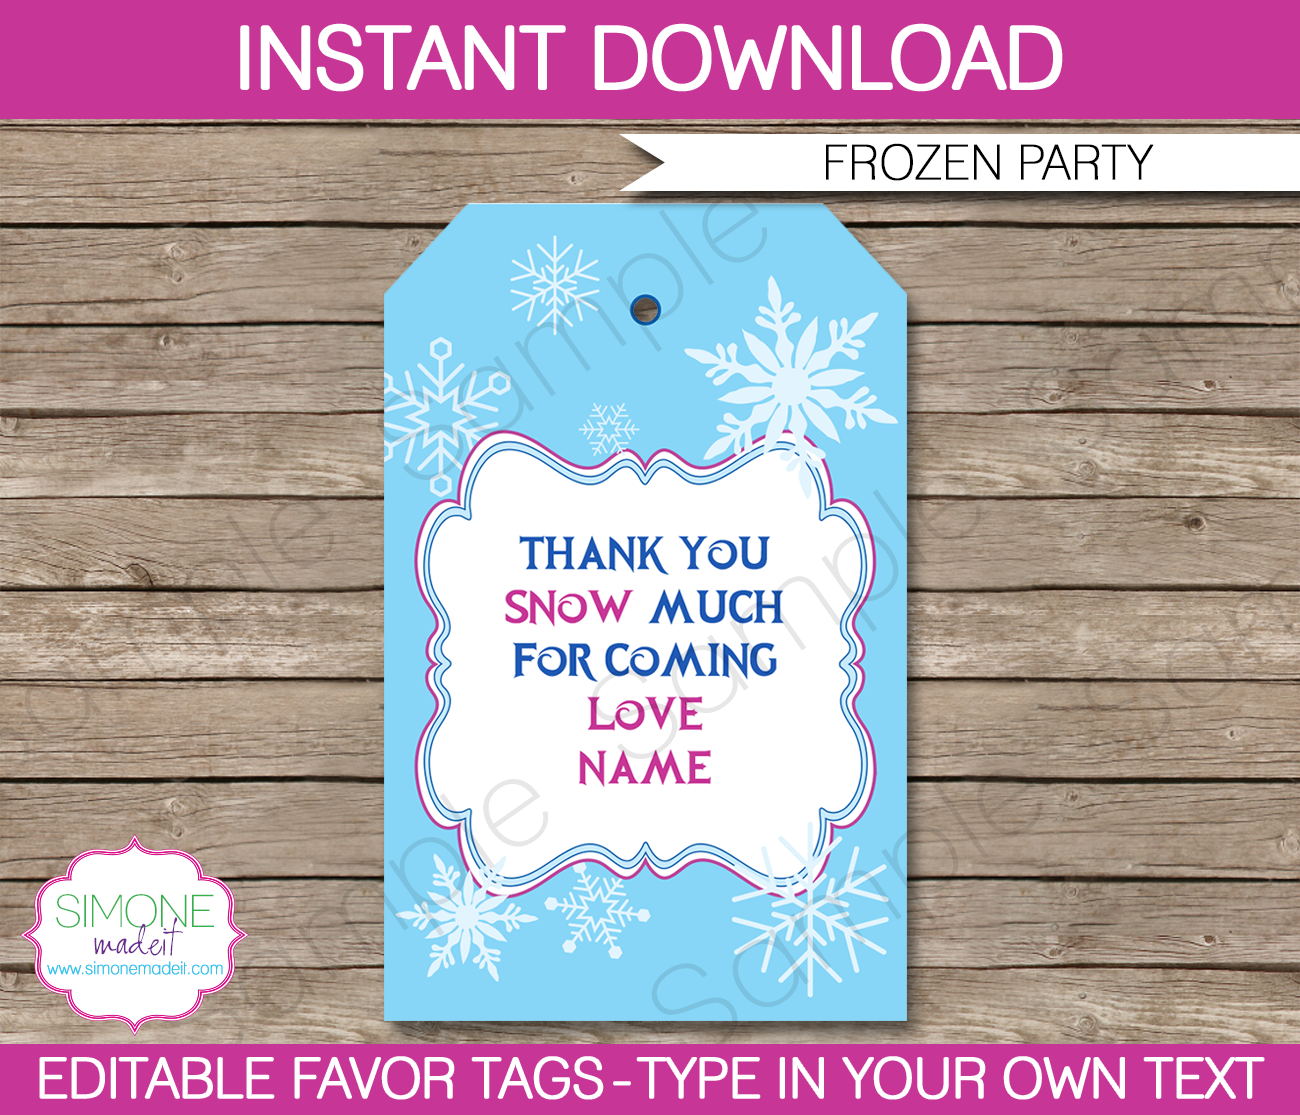 Frozen Party Favor Tags | Thank You Tags | Birthday Party Theme | Editable DIY Template | via SIMONEmadeit.com